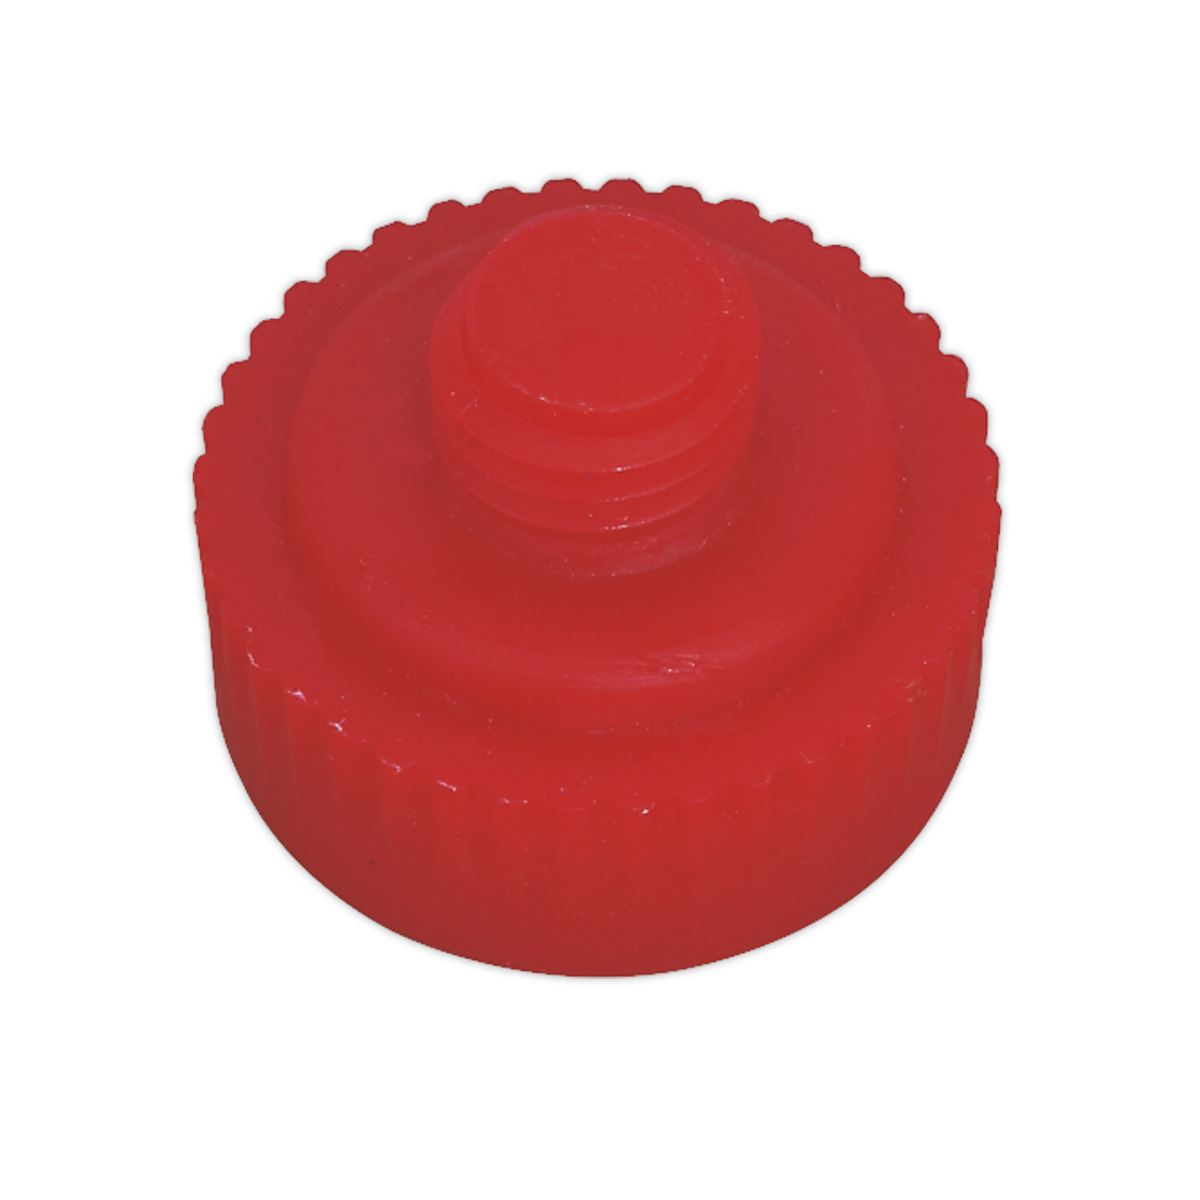 Sealey Premier Nylon Hammer Face, Medium/Red for NFH15